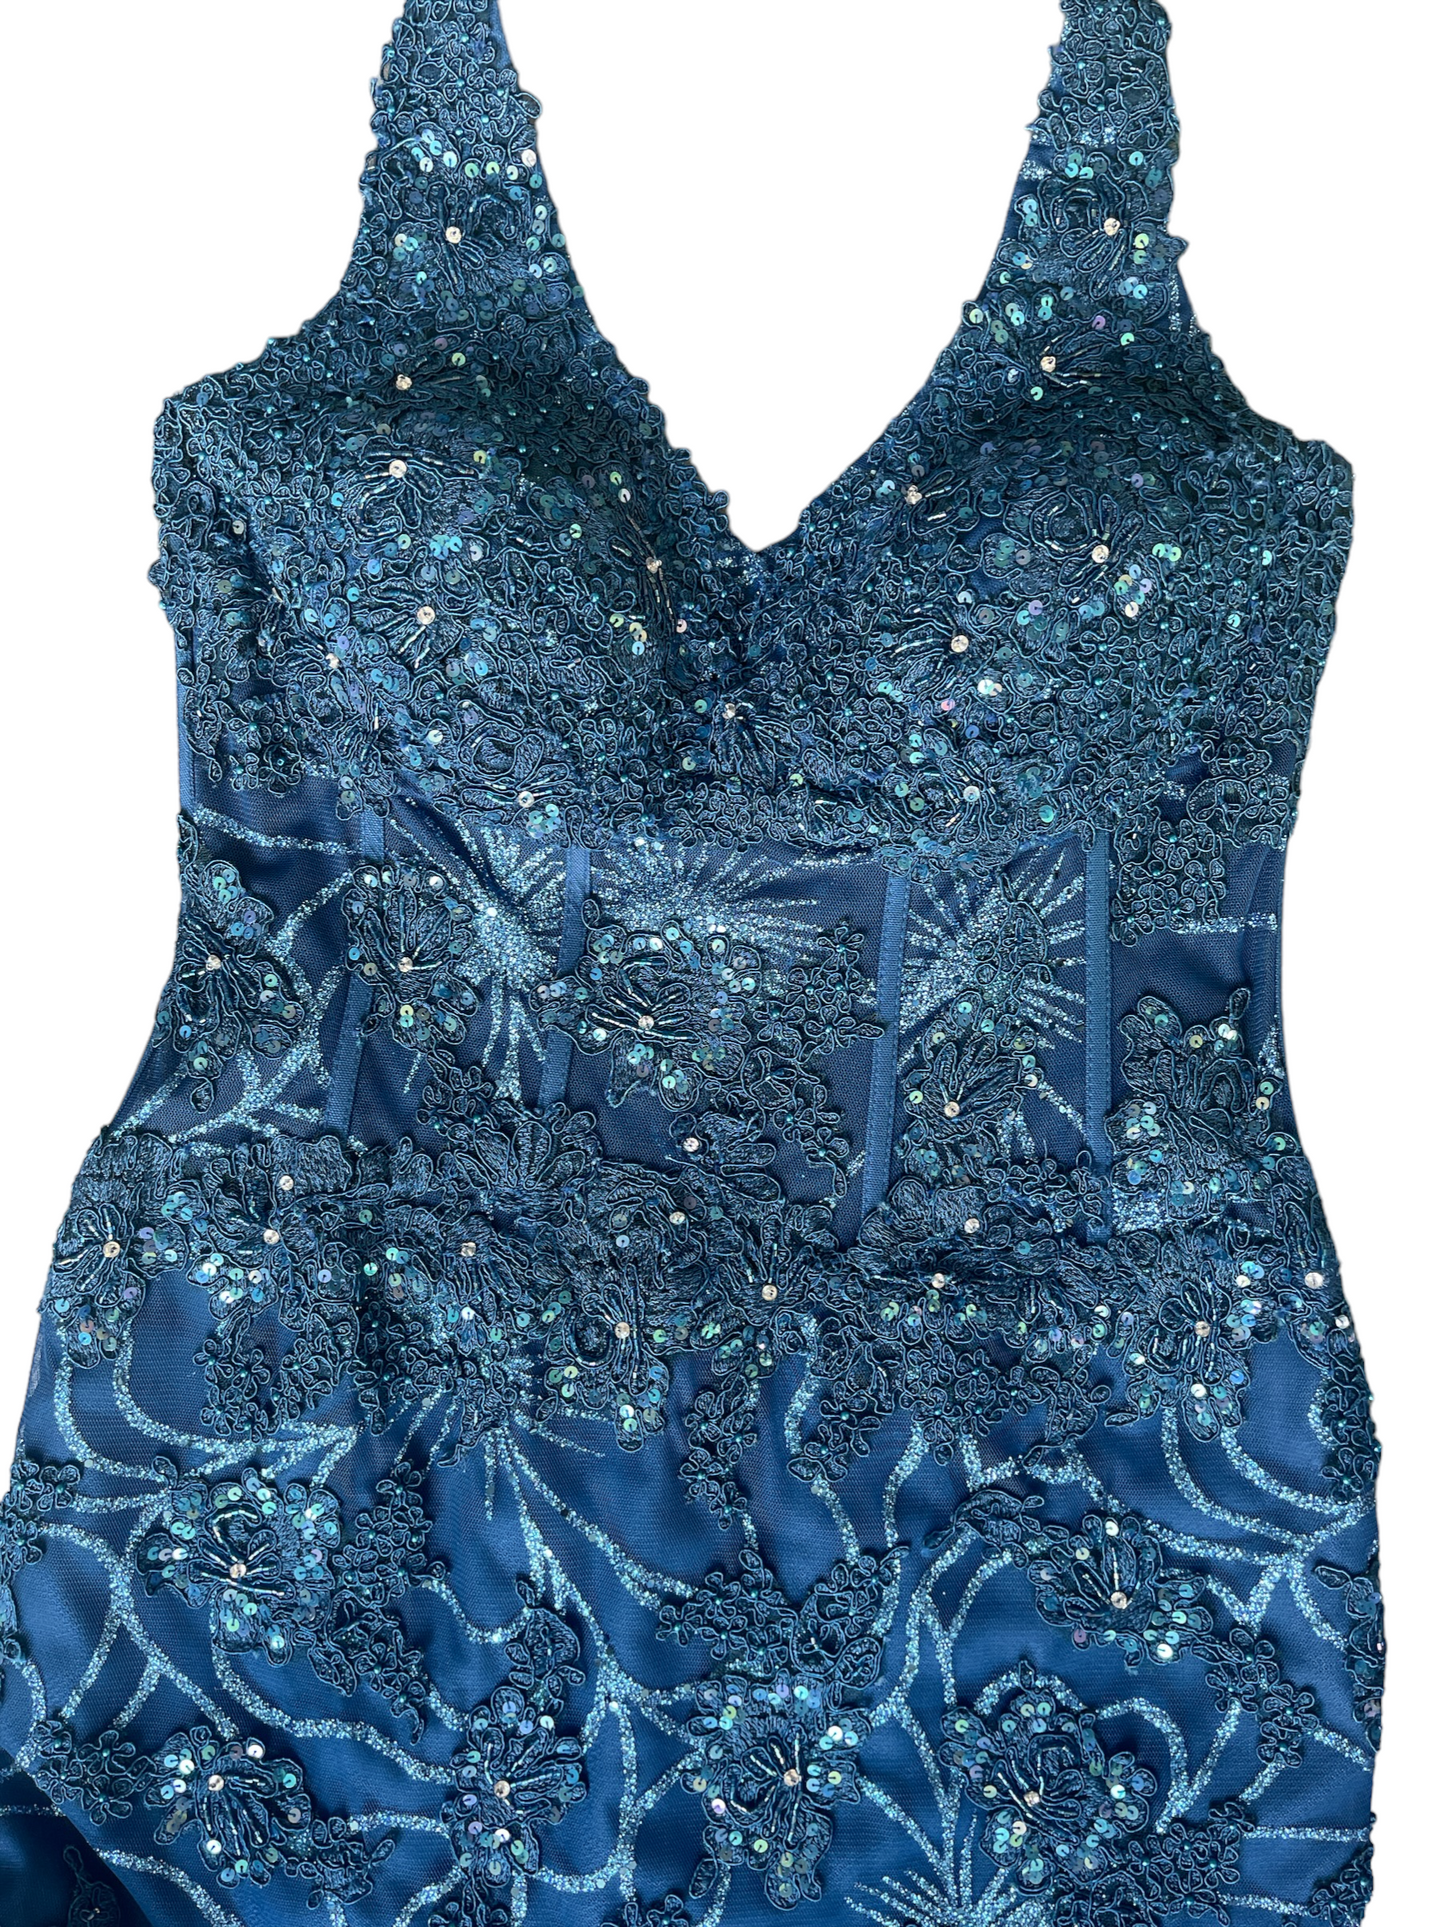 Designer Formal Blue Sequin Dress With Crinoline And Tulle Tassels Size 10